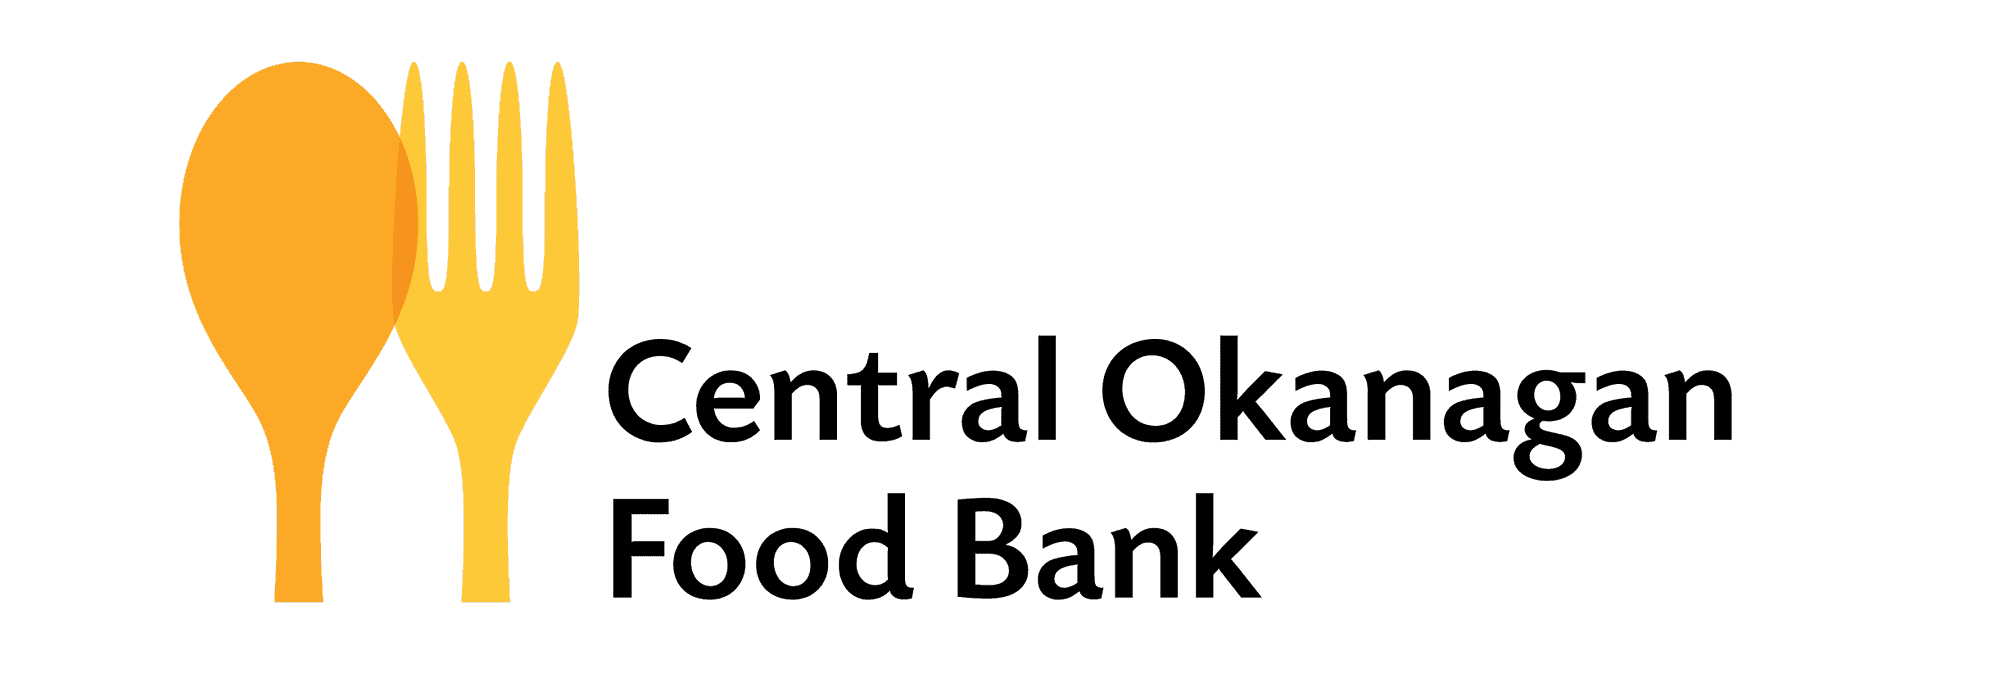 Central Okanagan Food Bank logo